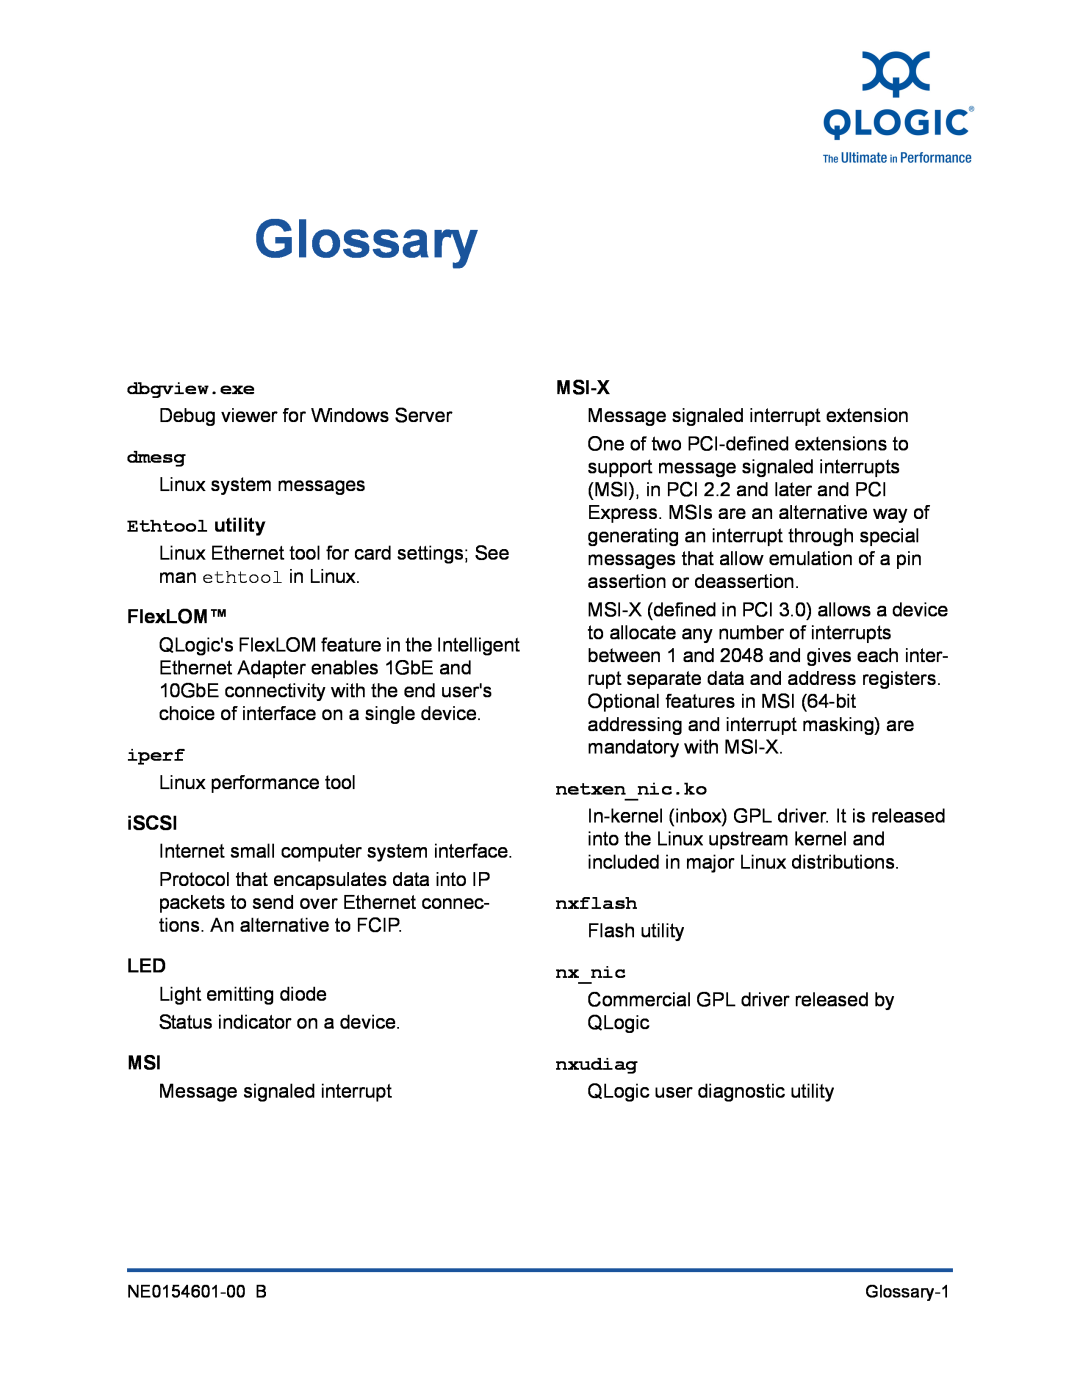 Q-Logic 3000, 3100 manual Glossary, dbgview.exe, dmesg, Ethtool utility, iperf, netxennic.ko, nxflash, nxnic, nxudiag 